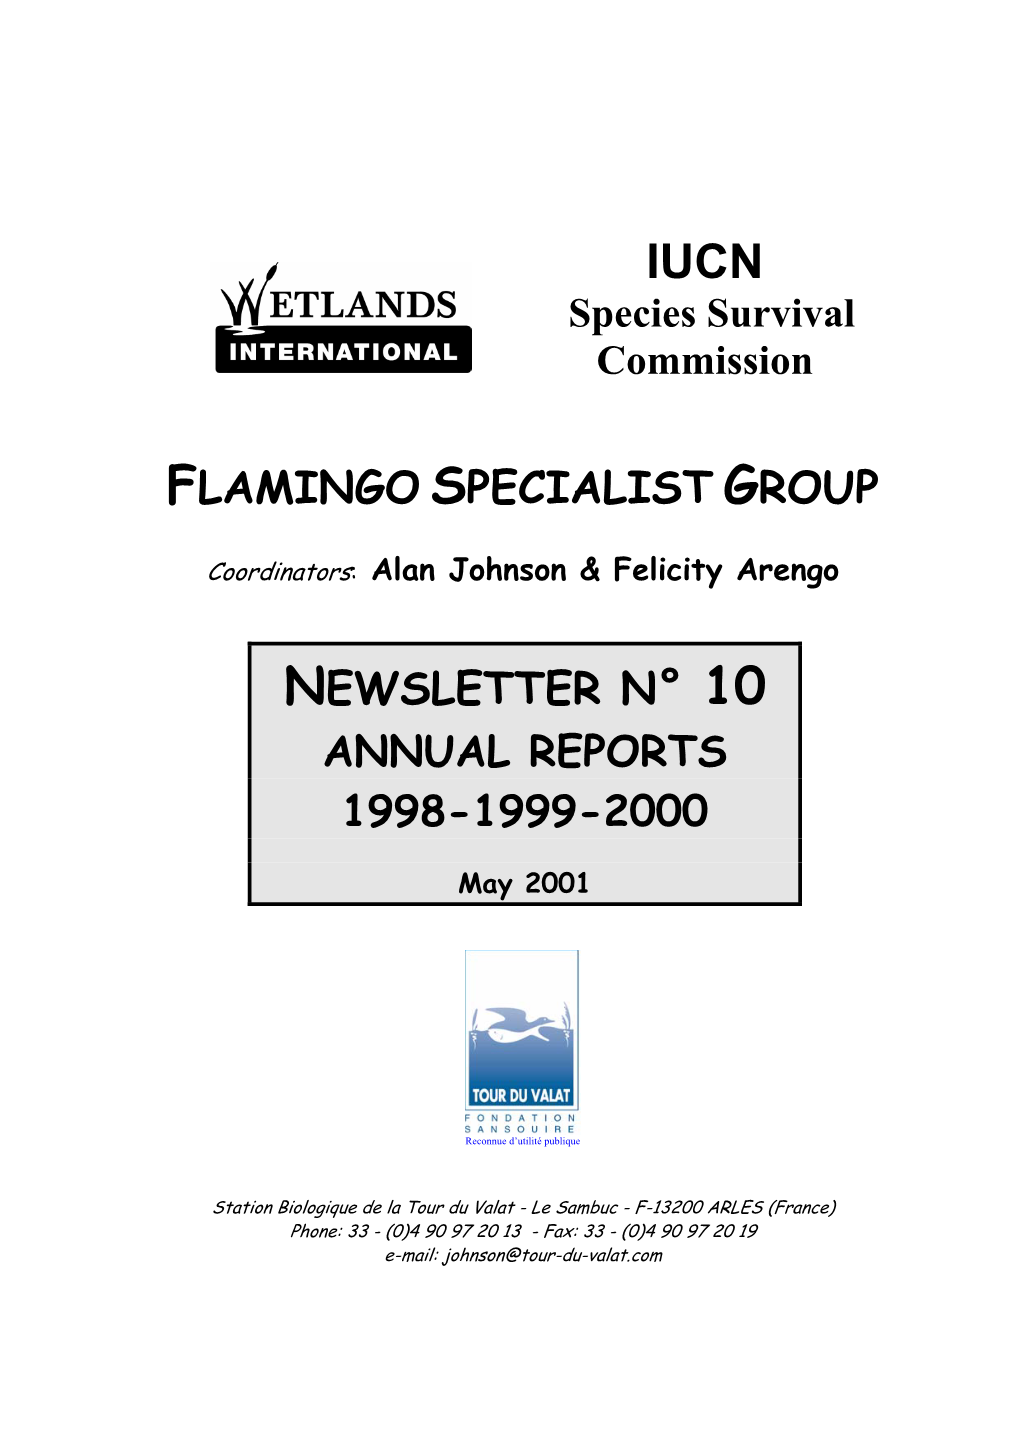 Flamingo Newsletter 10, 1998-2000